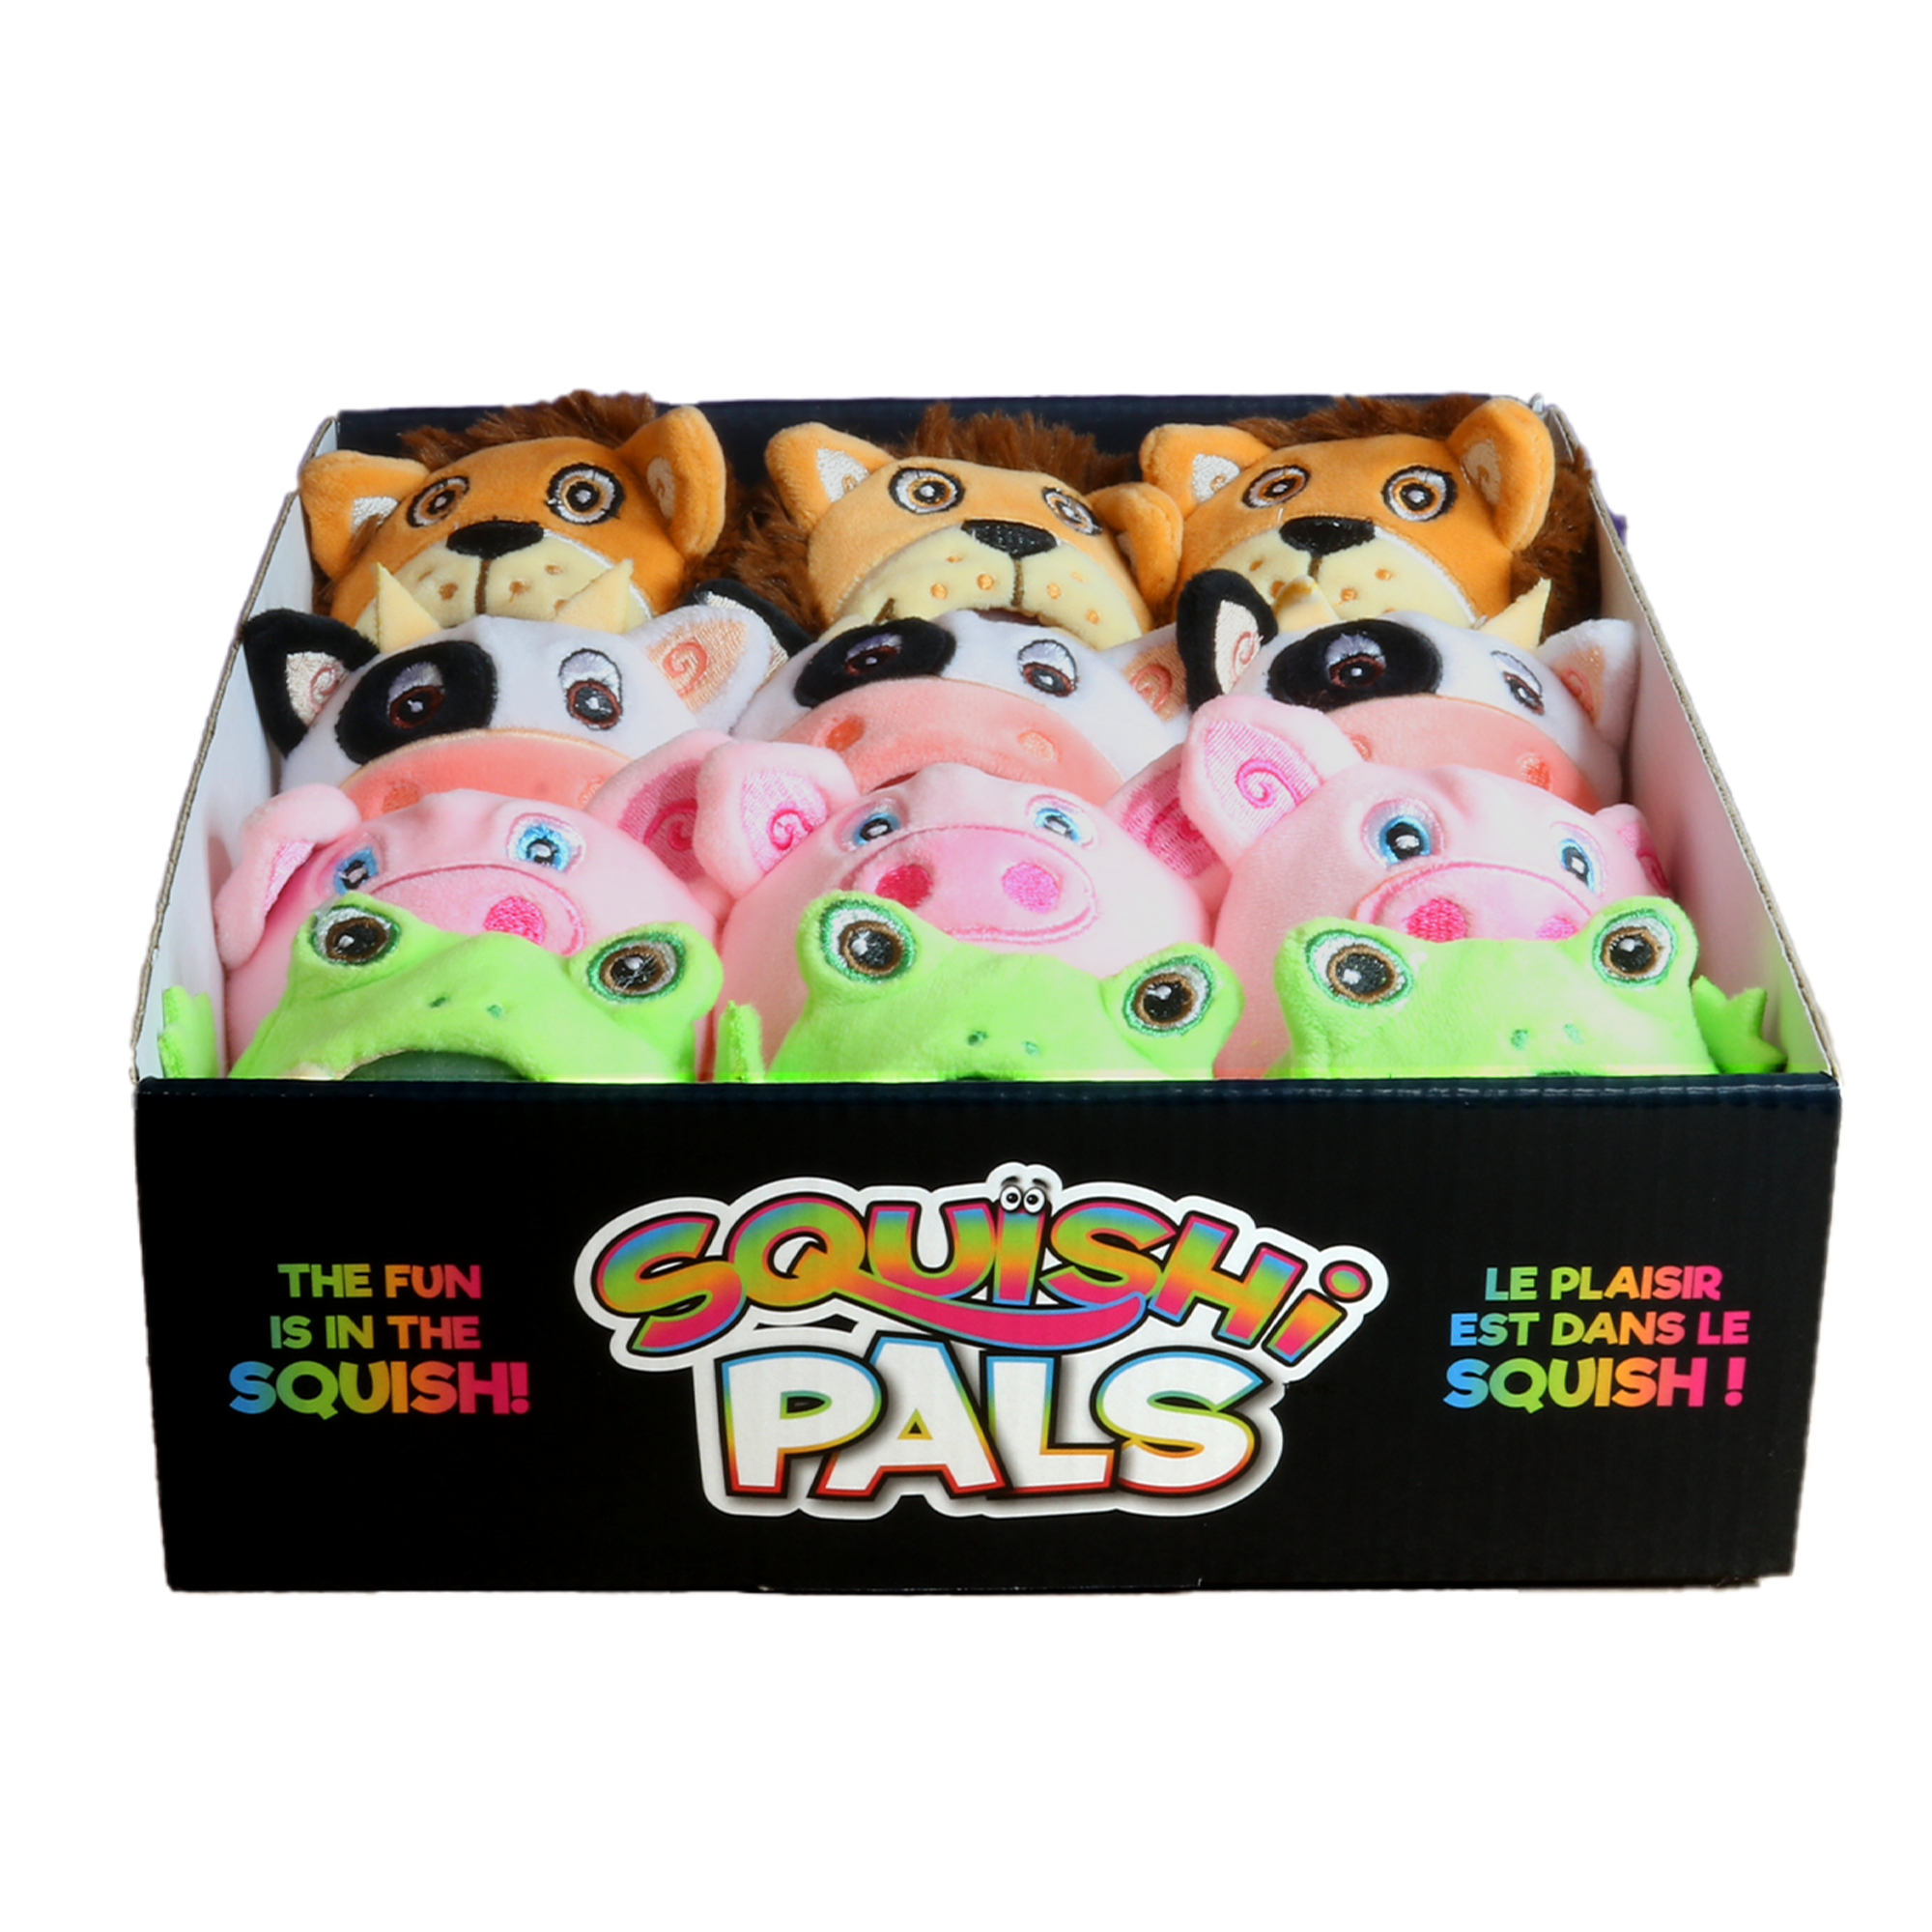 Squishi Pals animals